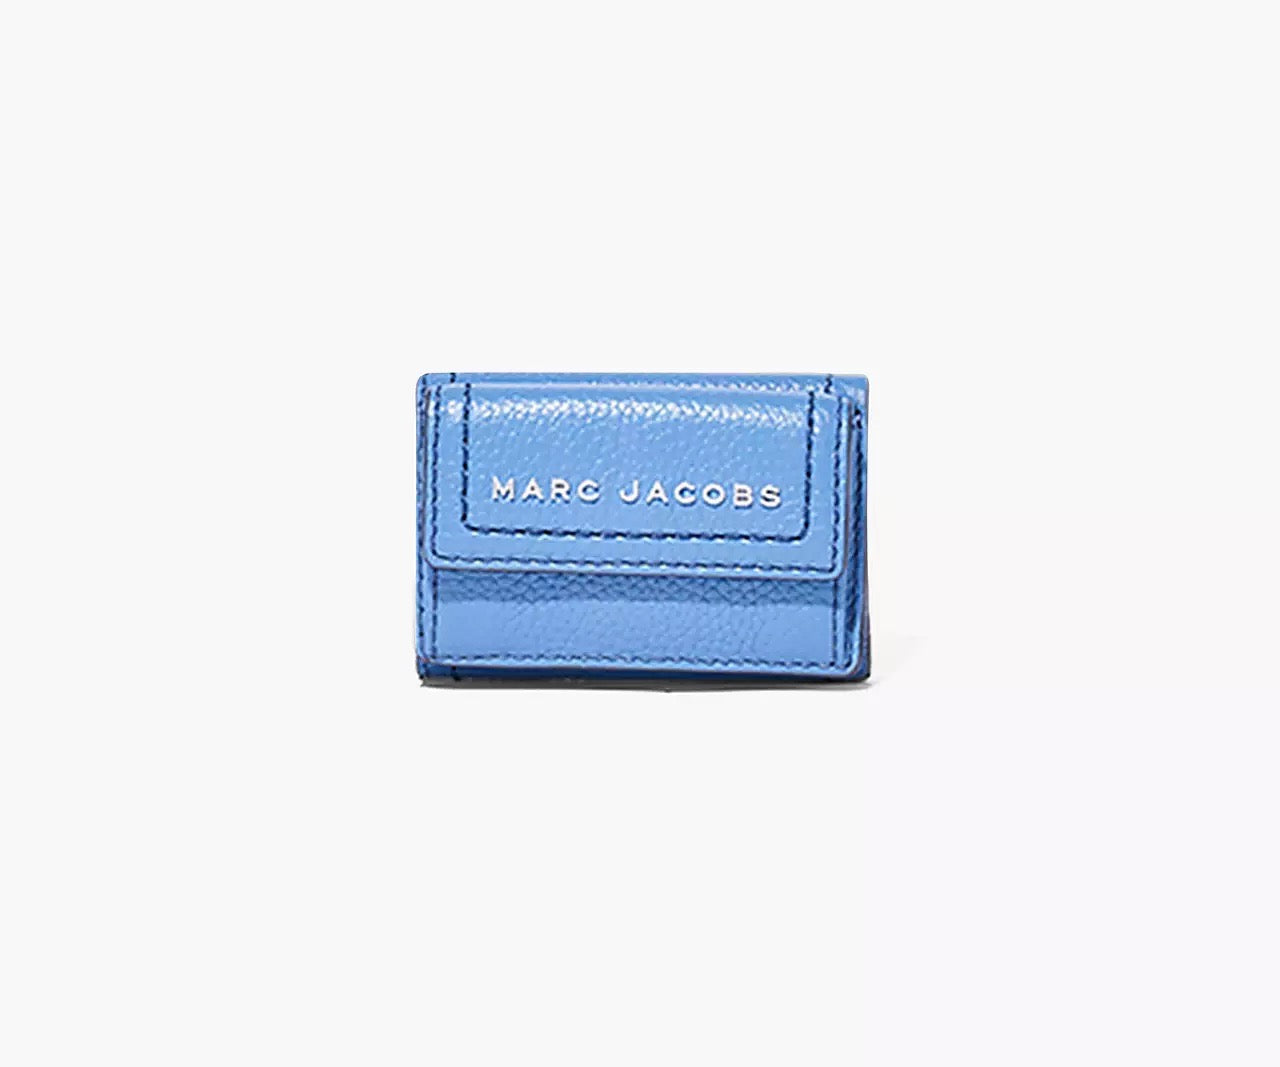 Marc Jacobs Mini Trifold Wallet in Coastal Blue (M0016973-421)